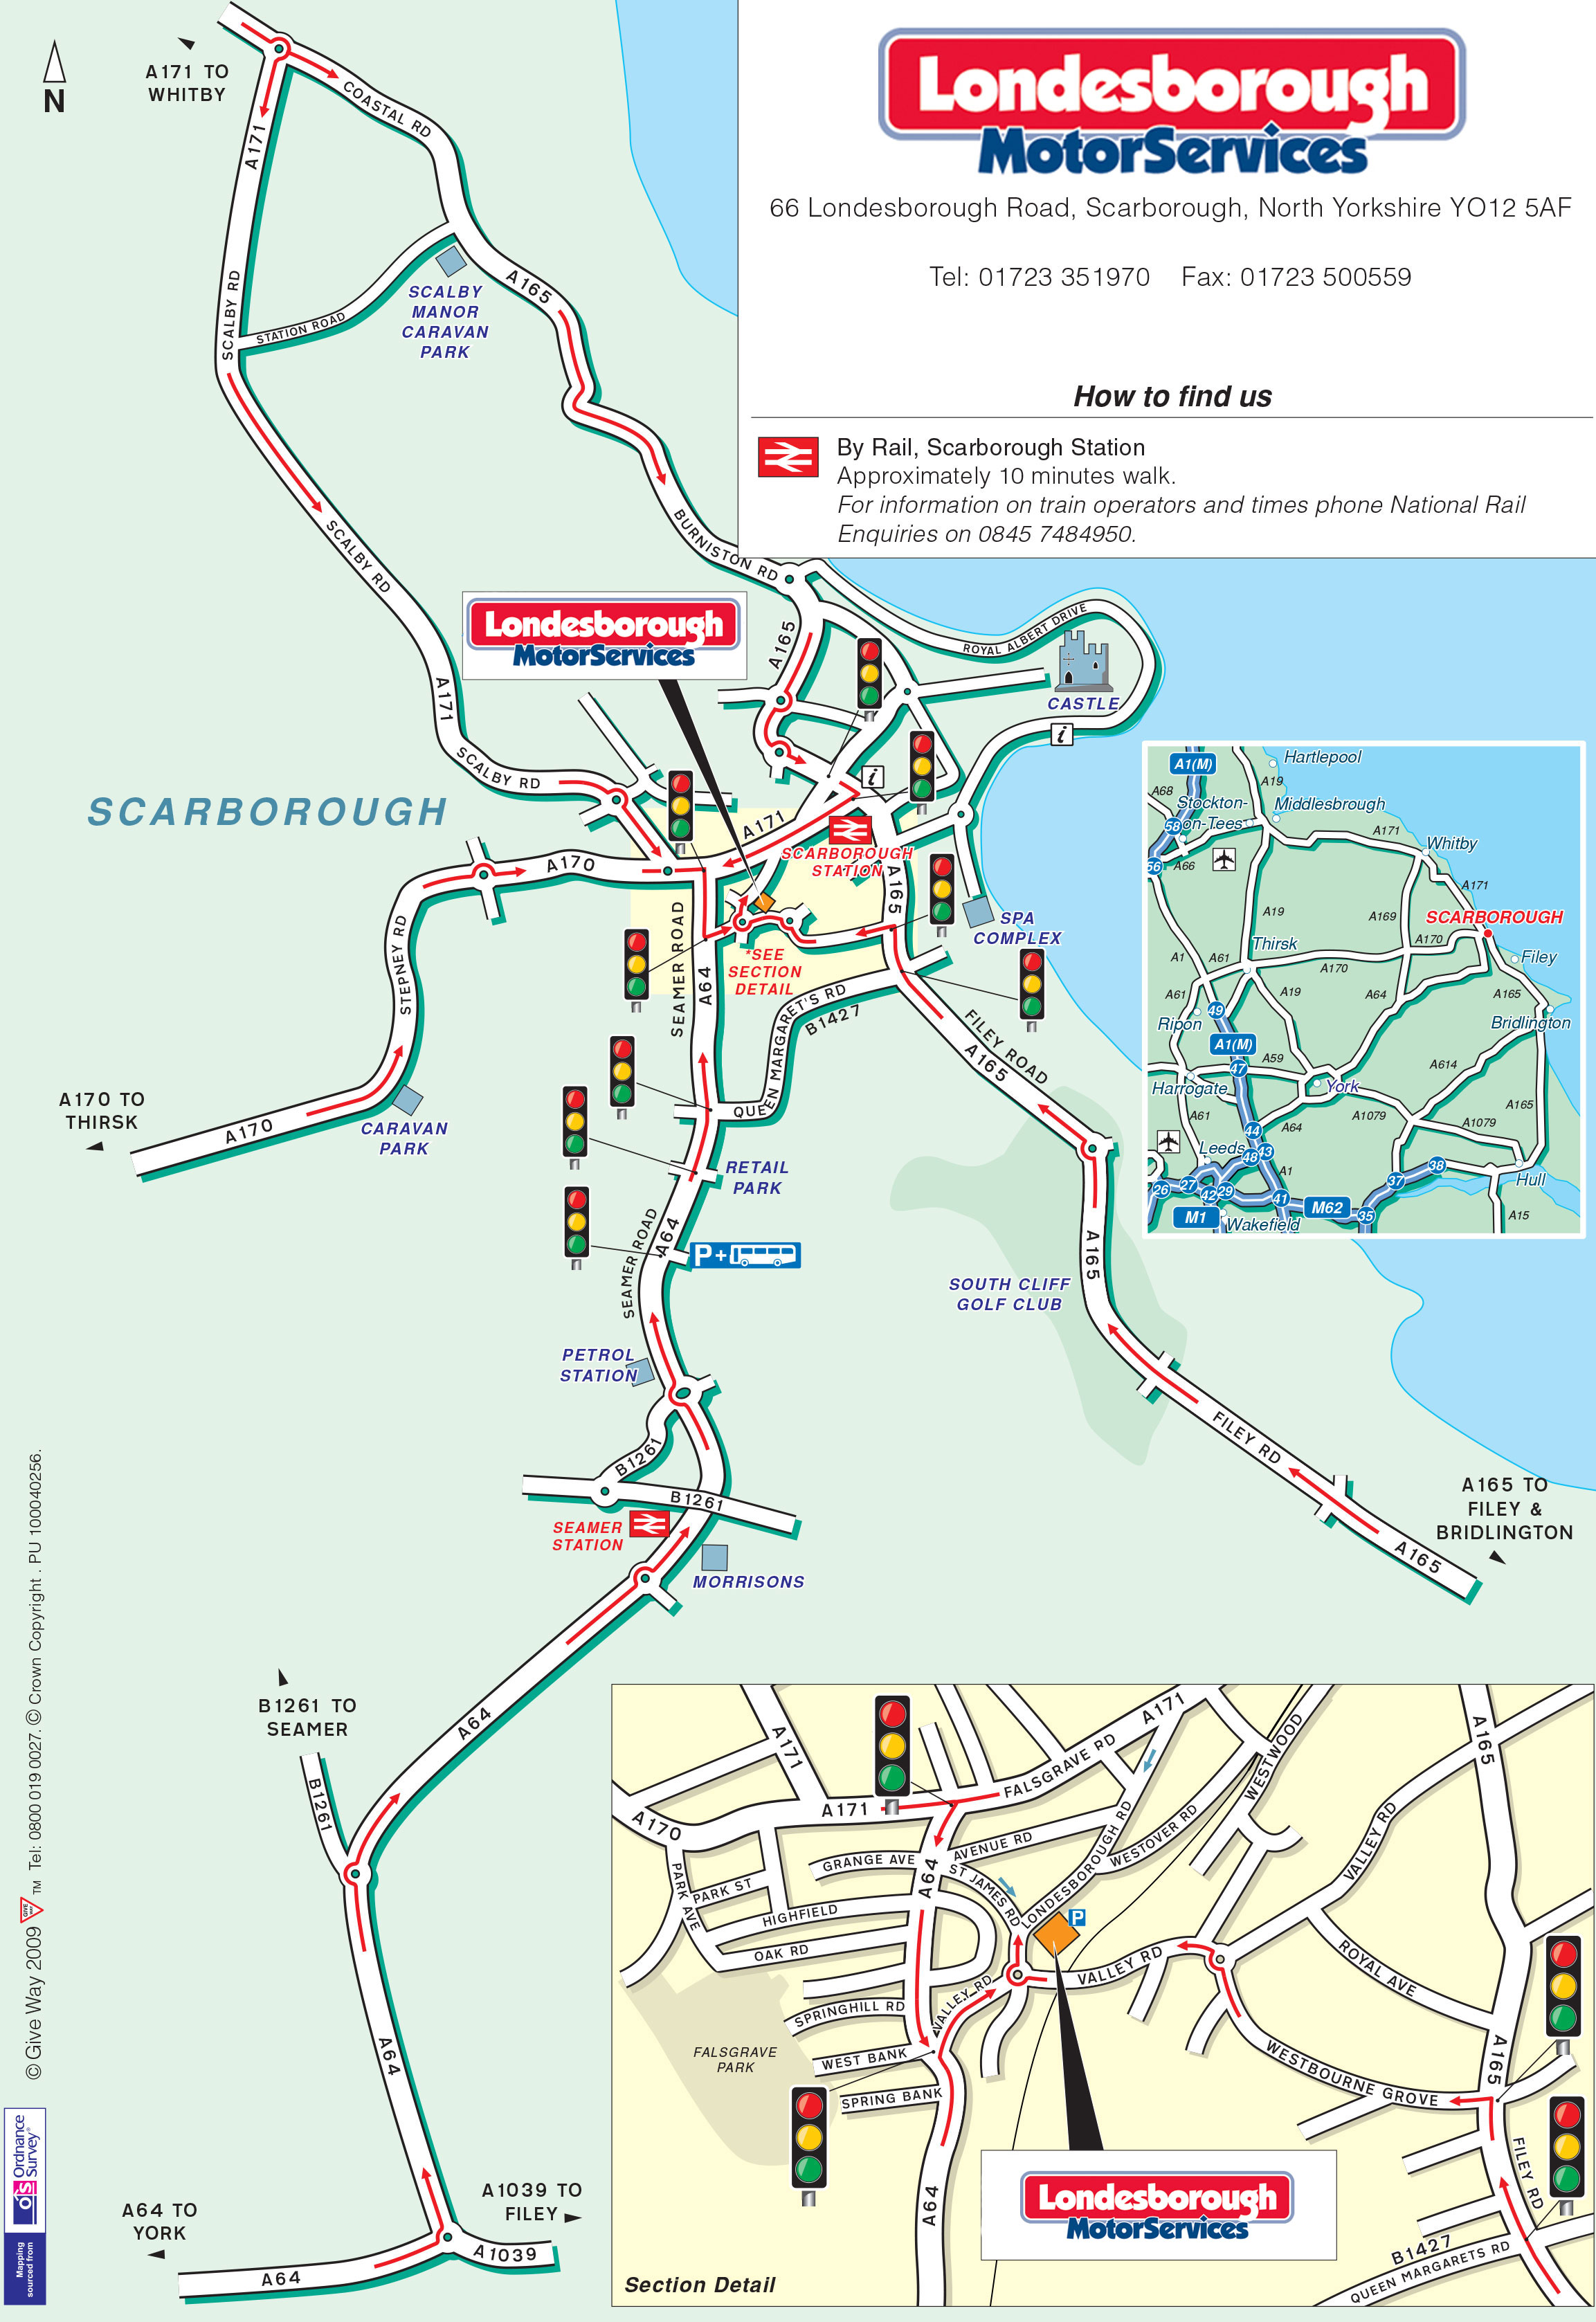 Londesborough Motor Services Map of Scarborough